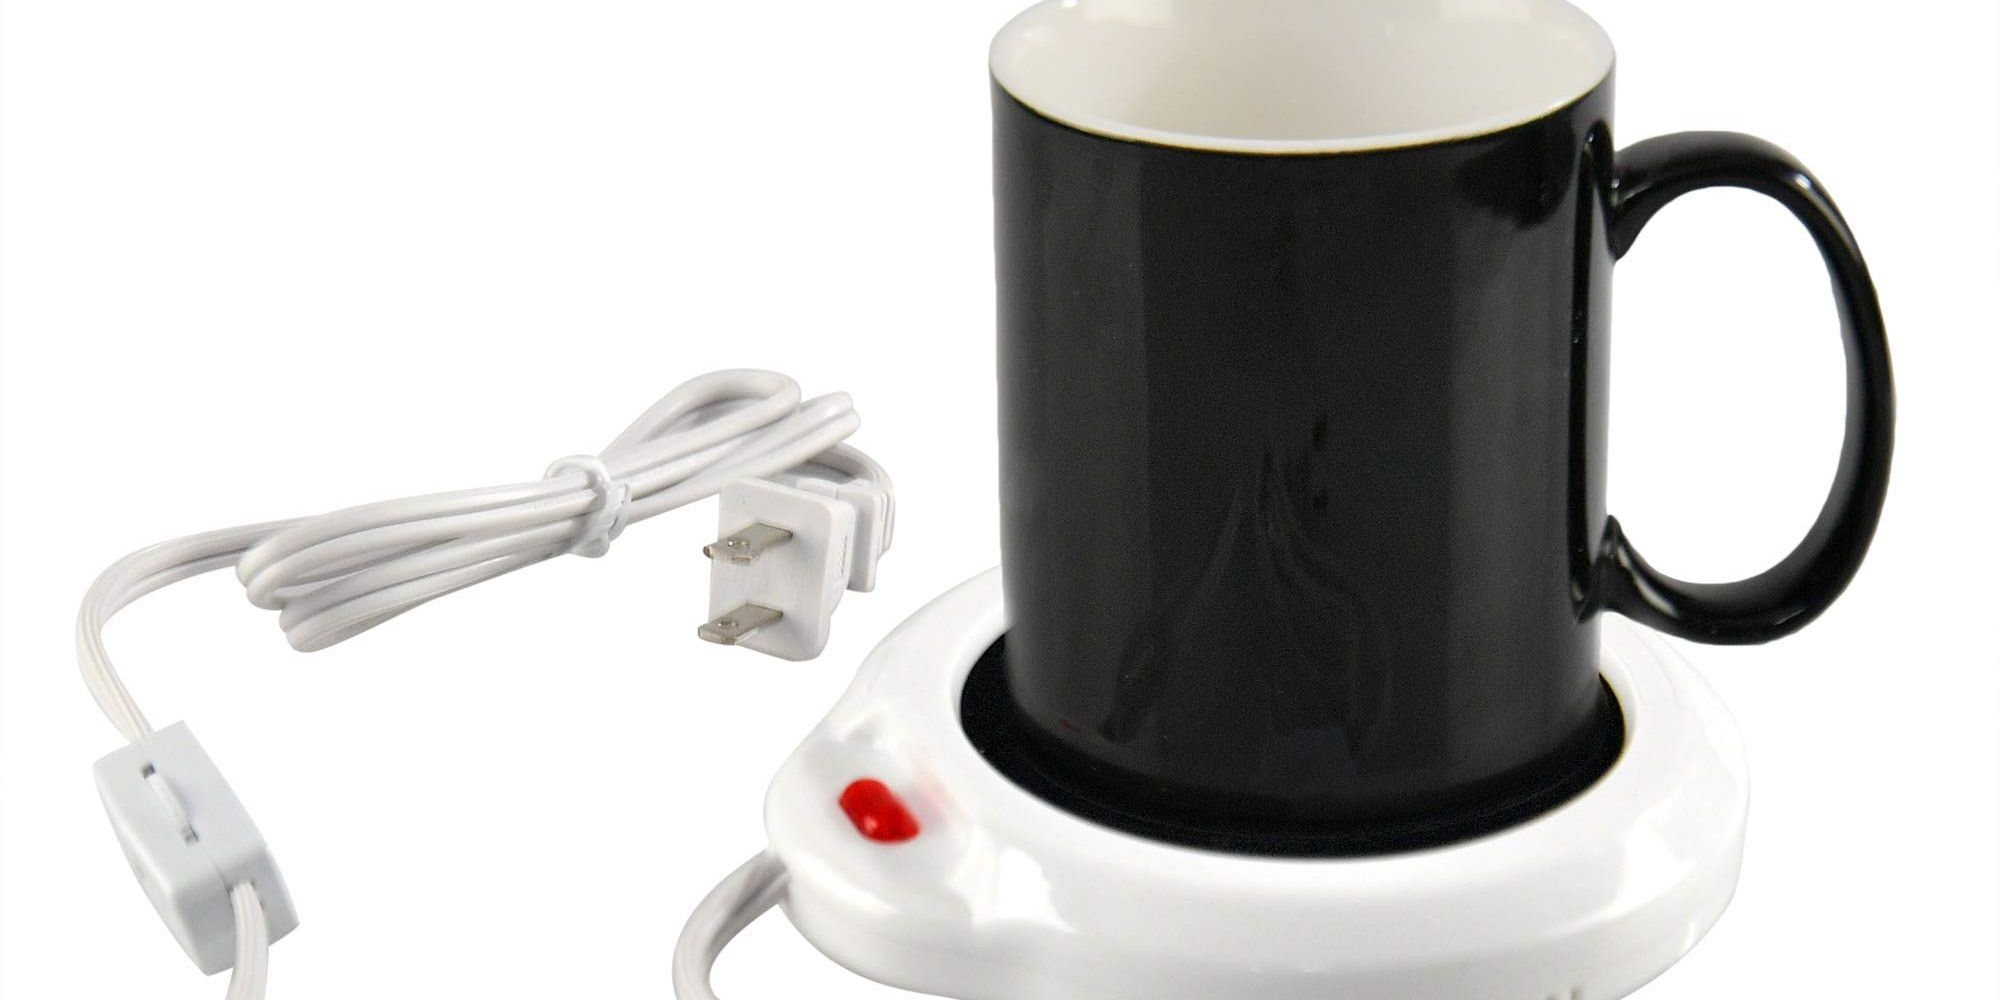 Black Mug on White Heated Coaster with Cord